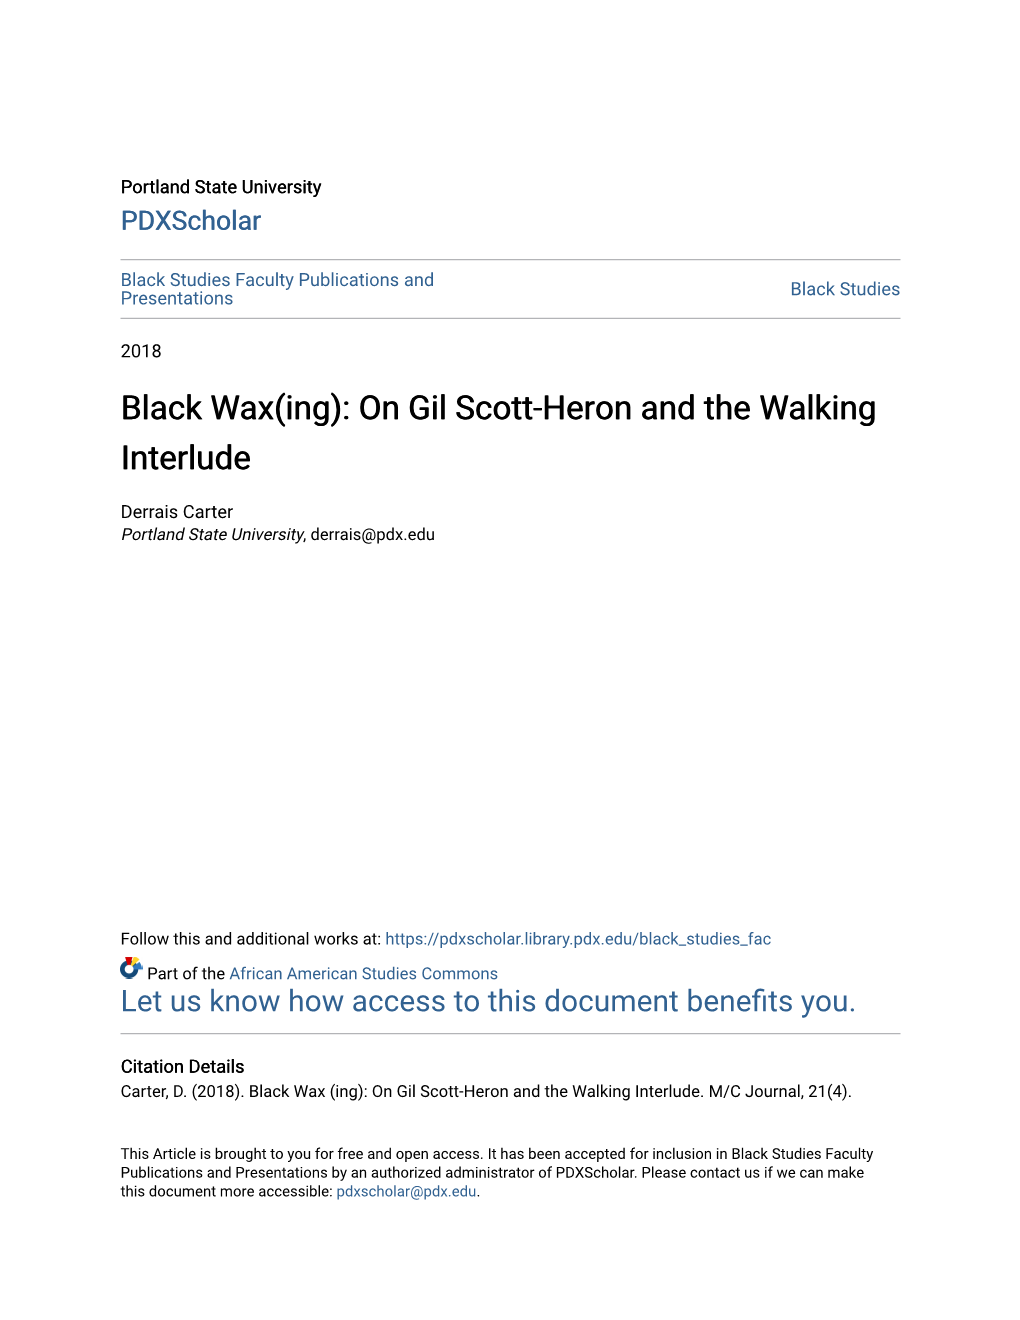 Black Wax(Ing): on Gil Scott-Heron and the Walking Interlude